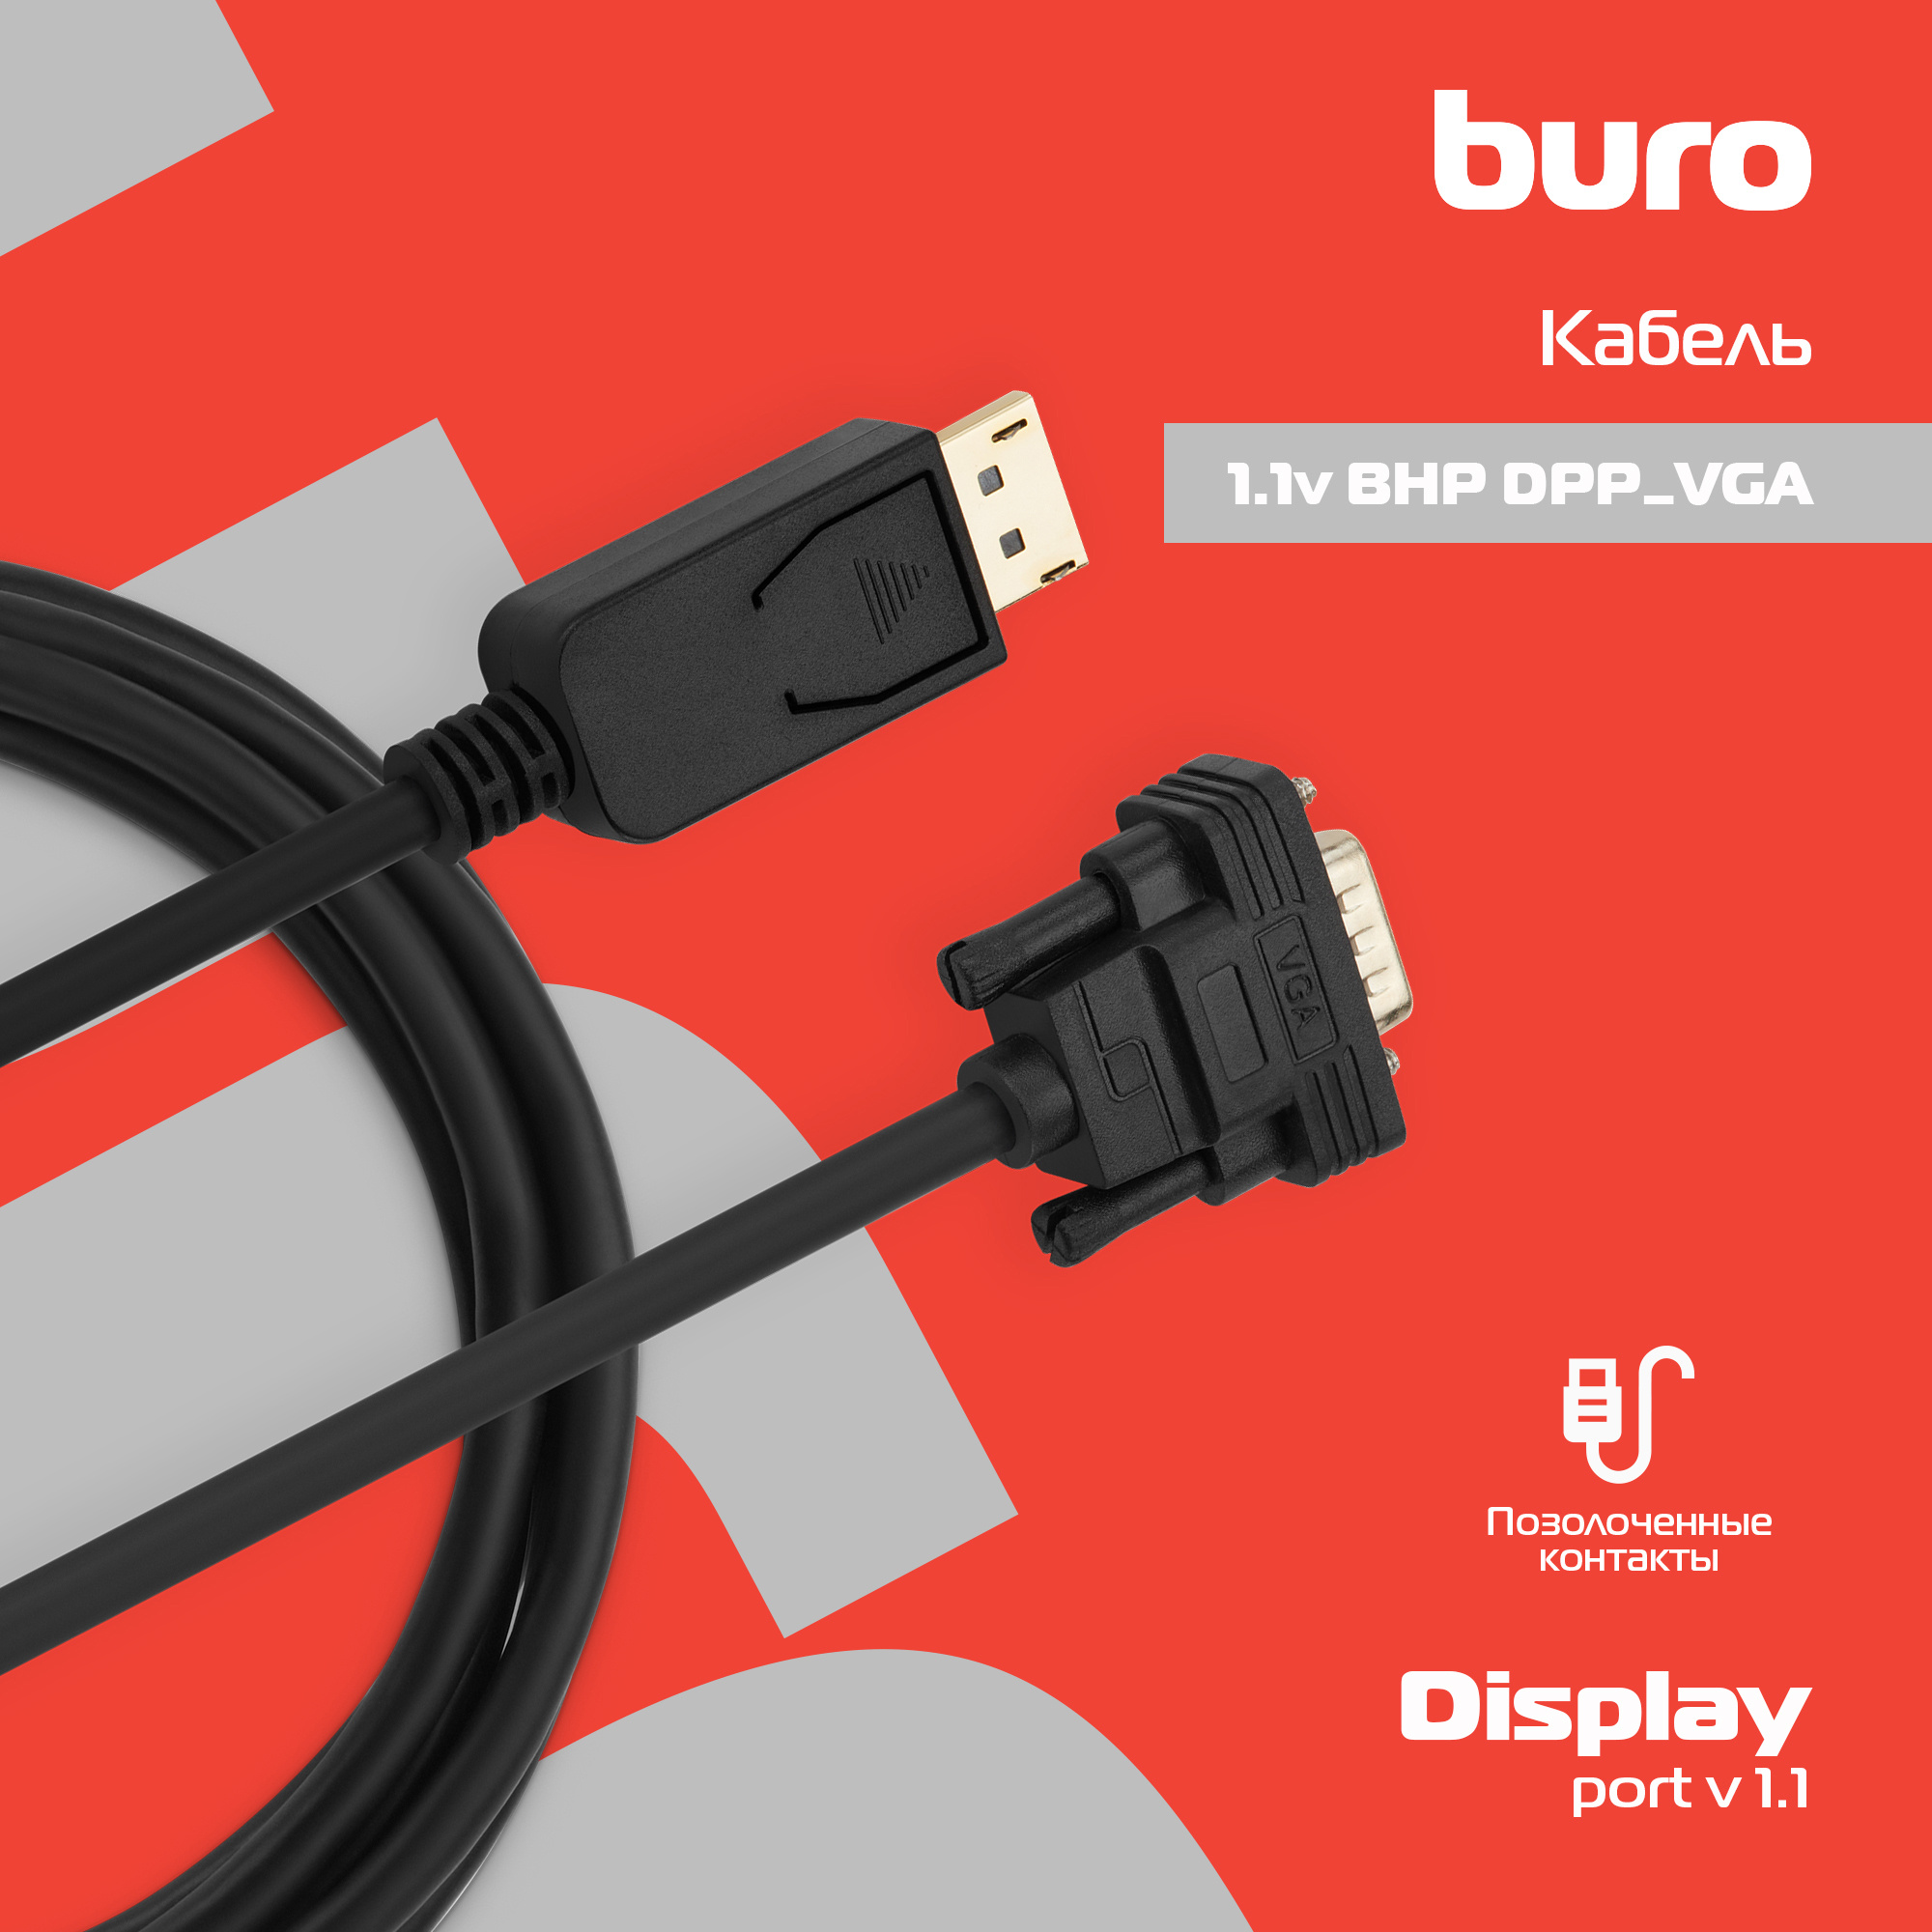 Кабель Buro 1.1v BHP DPP_VGA-2 DisplayPort (m) VGA (m) 2м